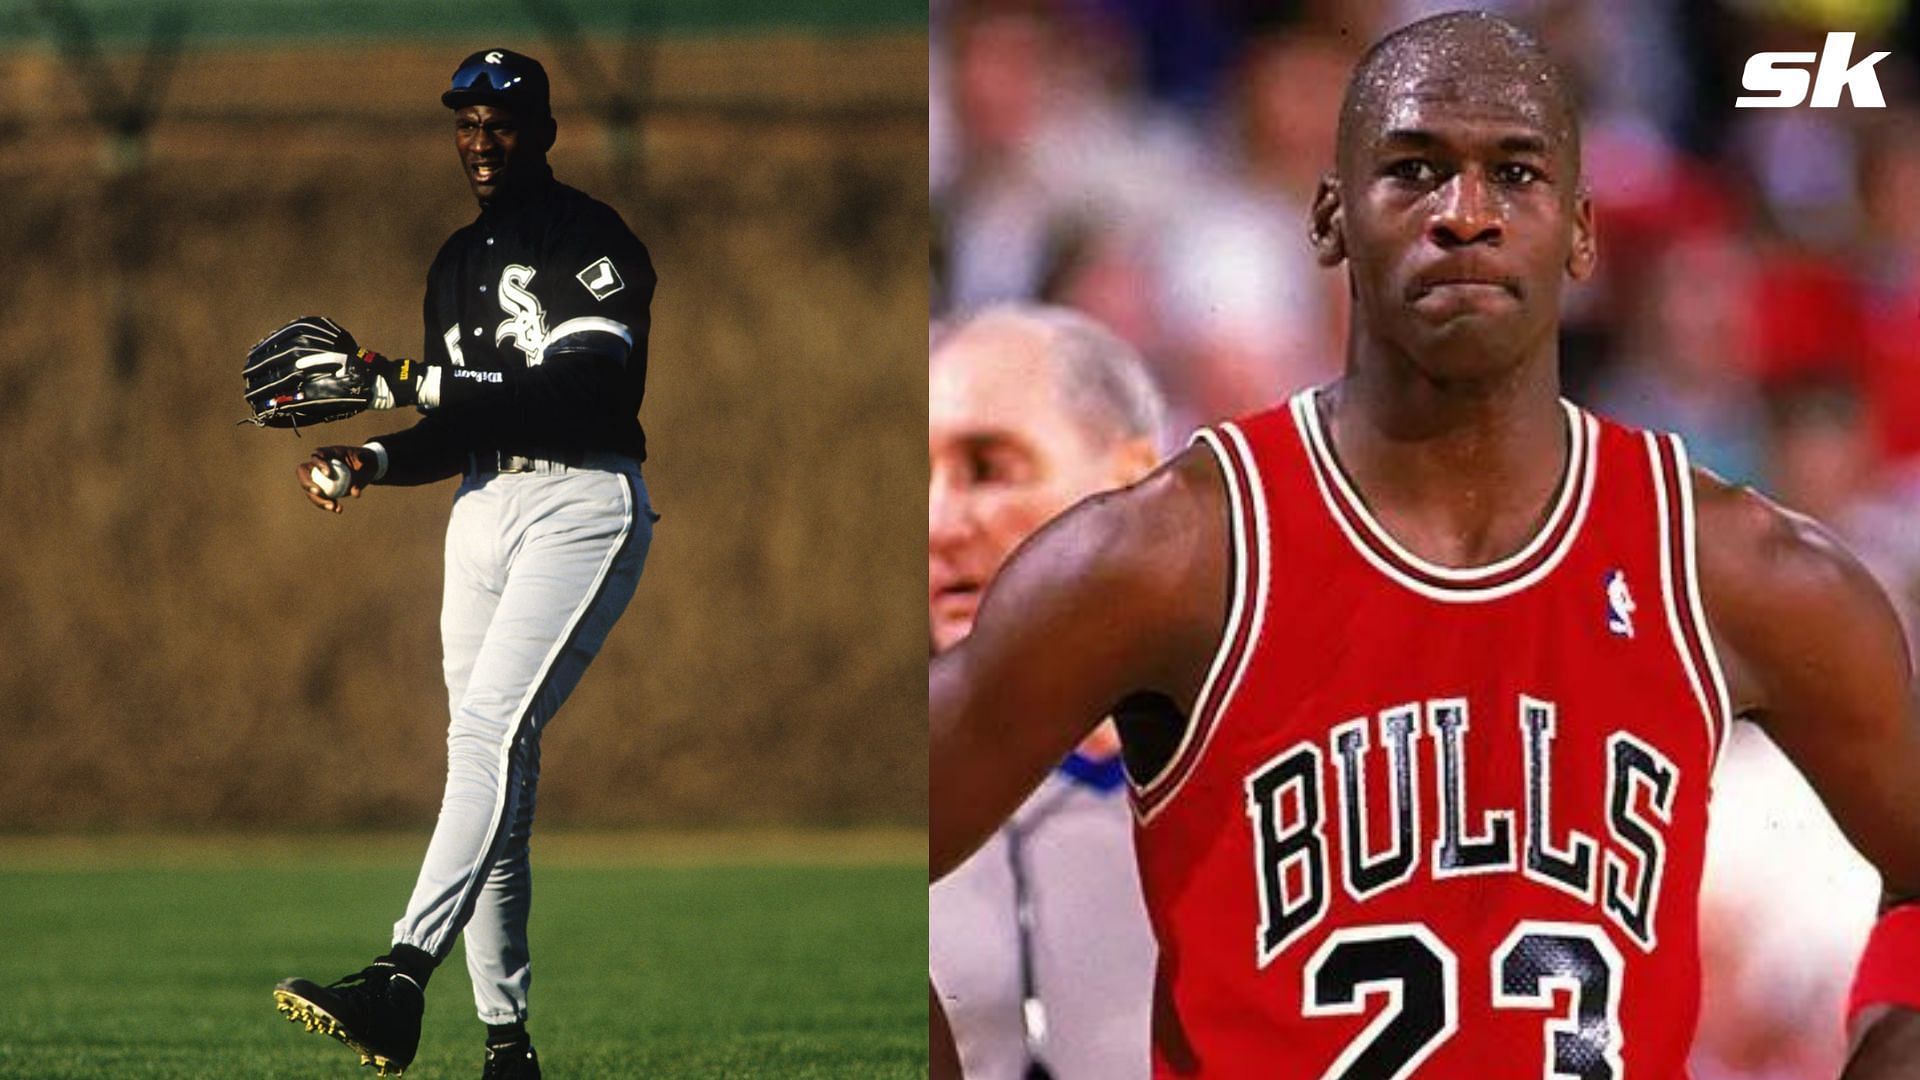 NBA legend Michael Jordan has a short-lived baseball career in 1994